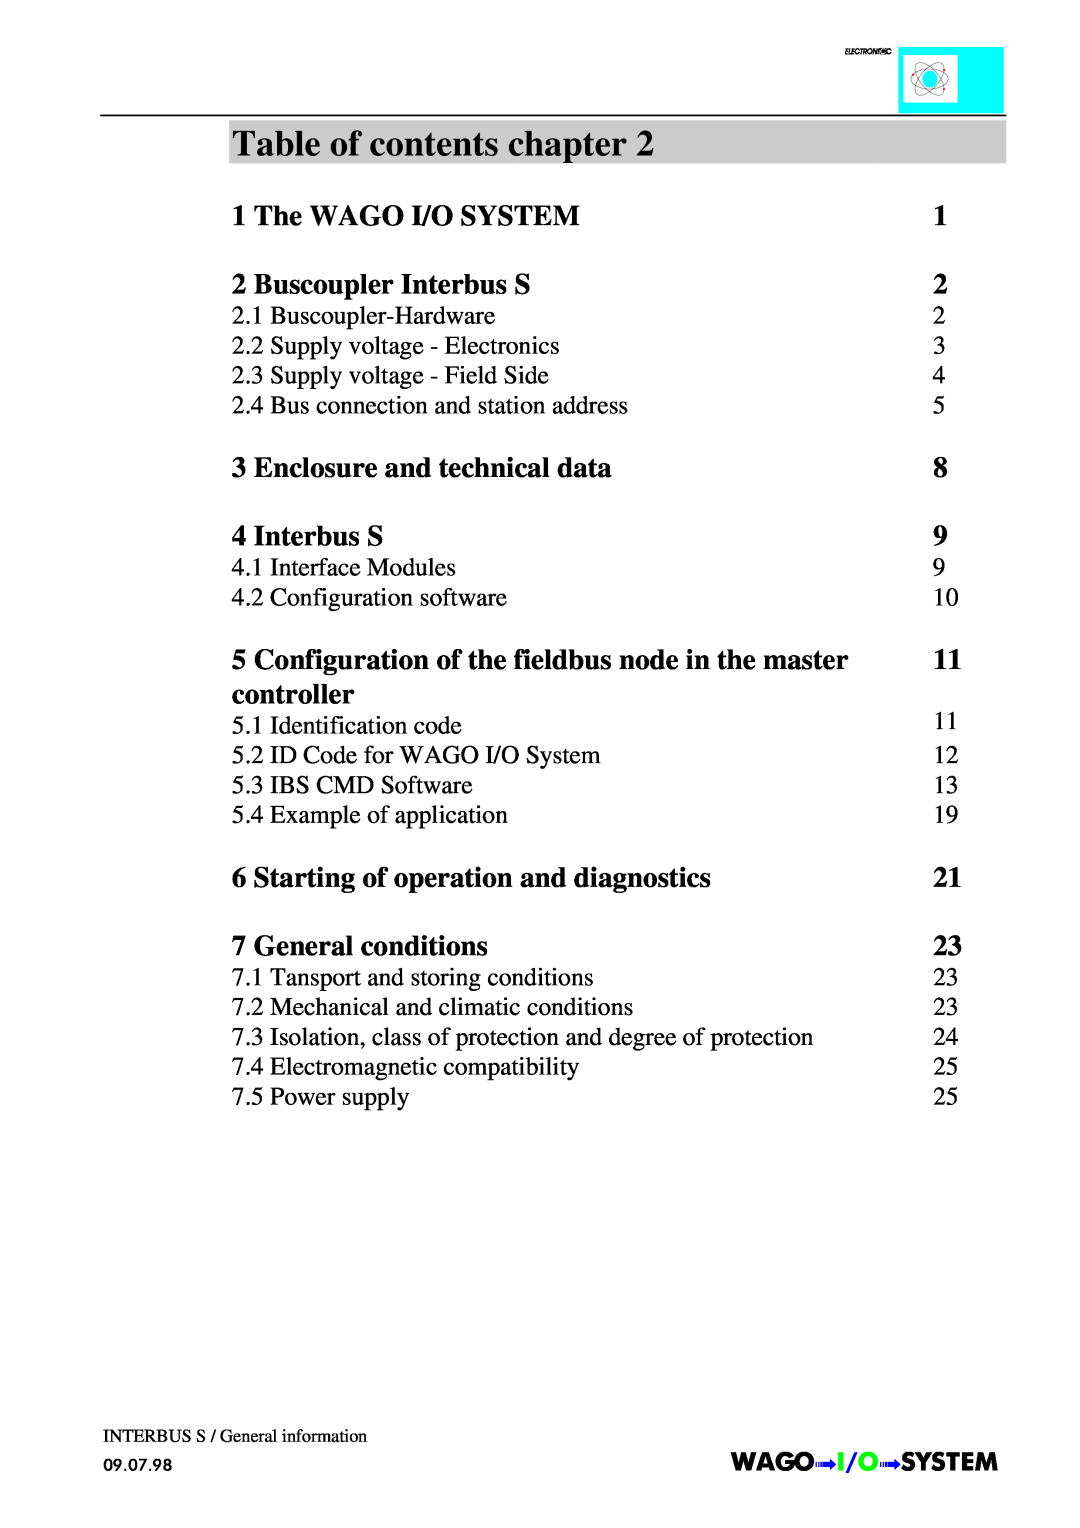 Quatech INTERBUS S manual The WAGO I/O SYSTEM, Buscoupler Interbus S, Enclosure and technical data, controller 